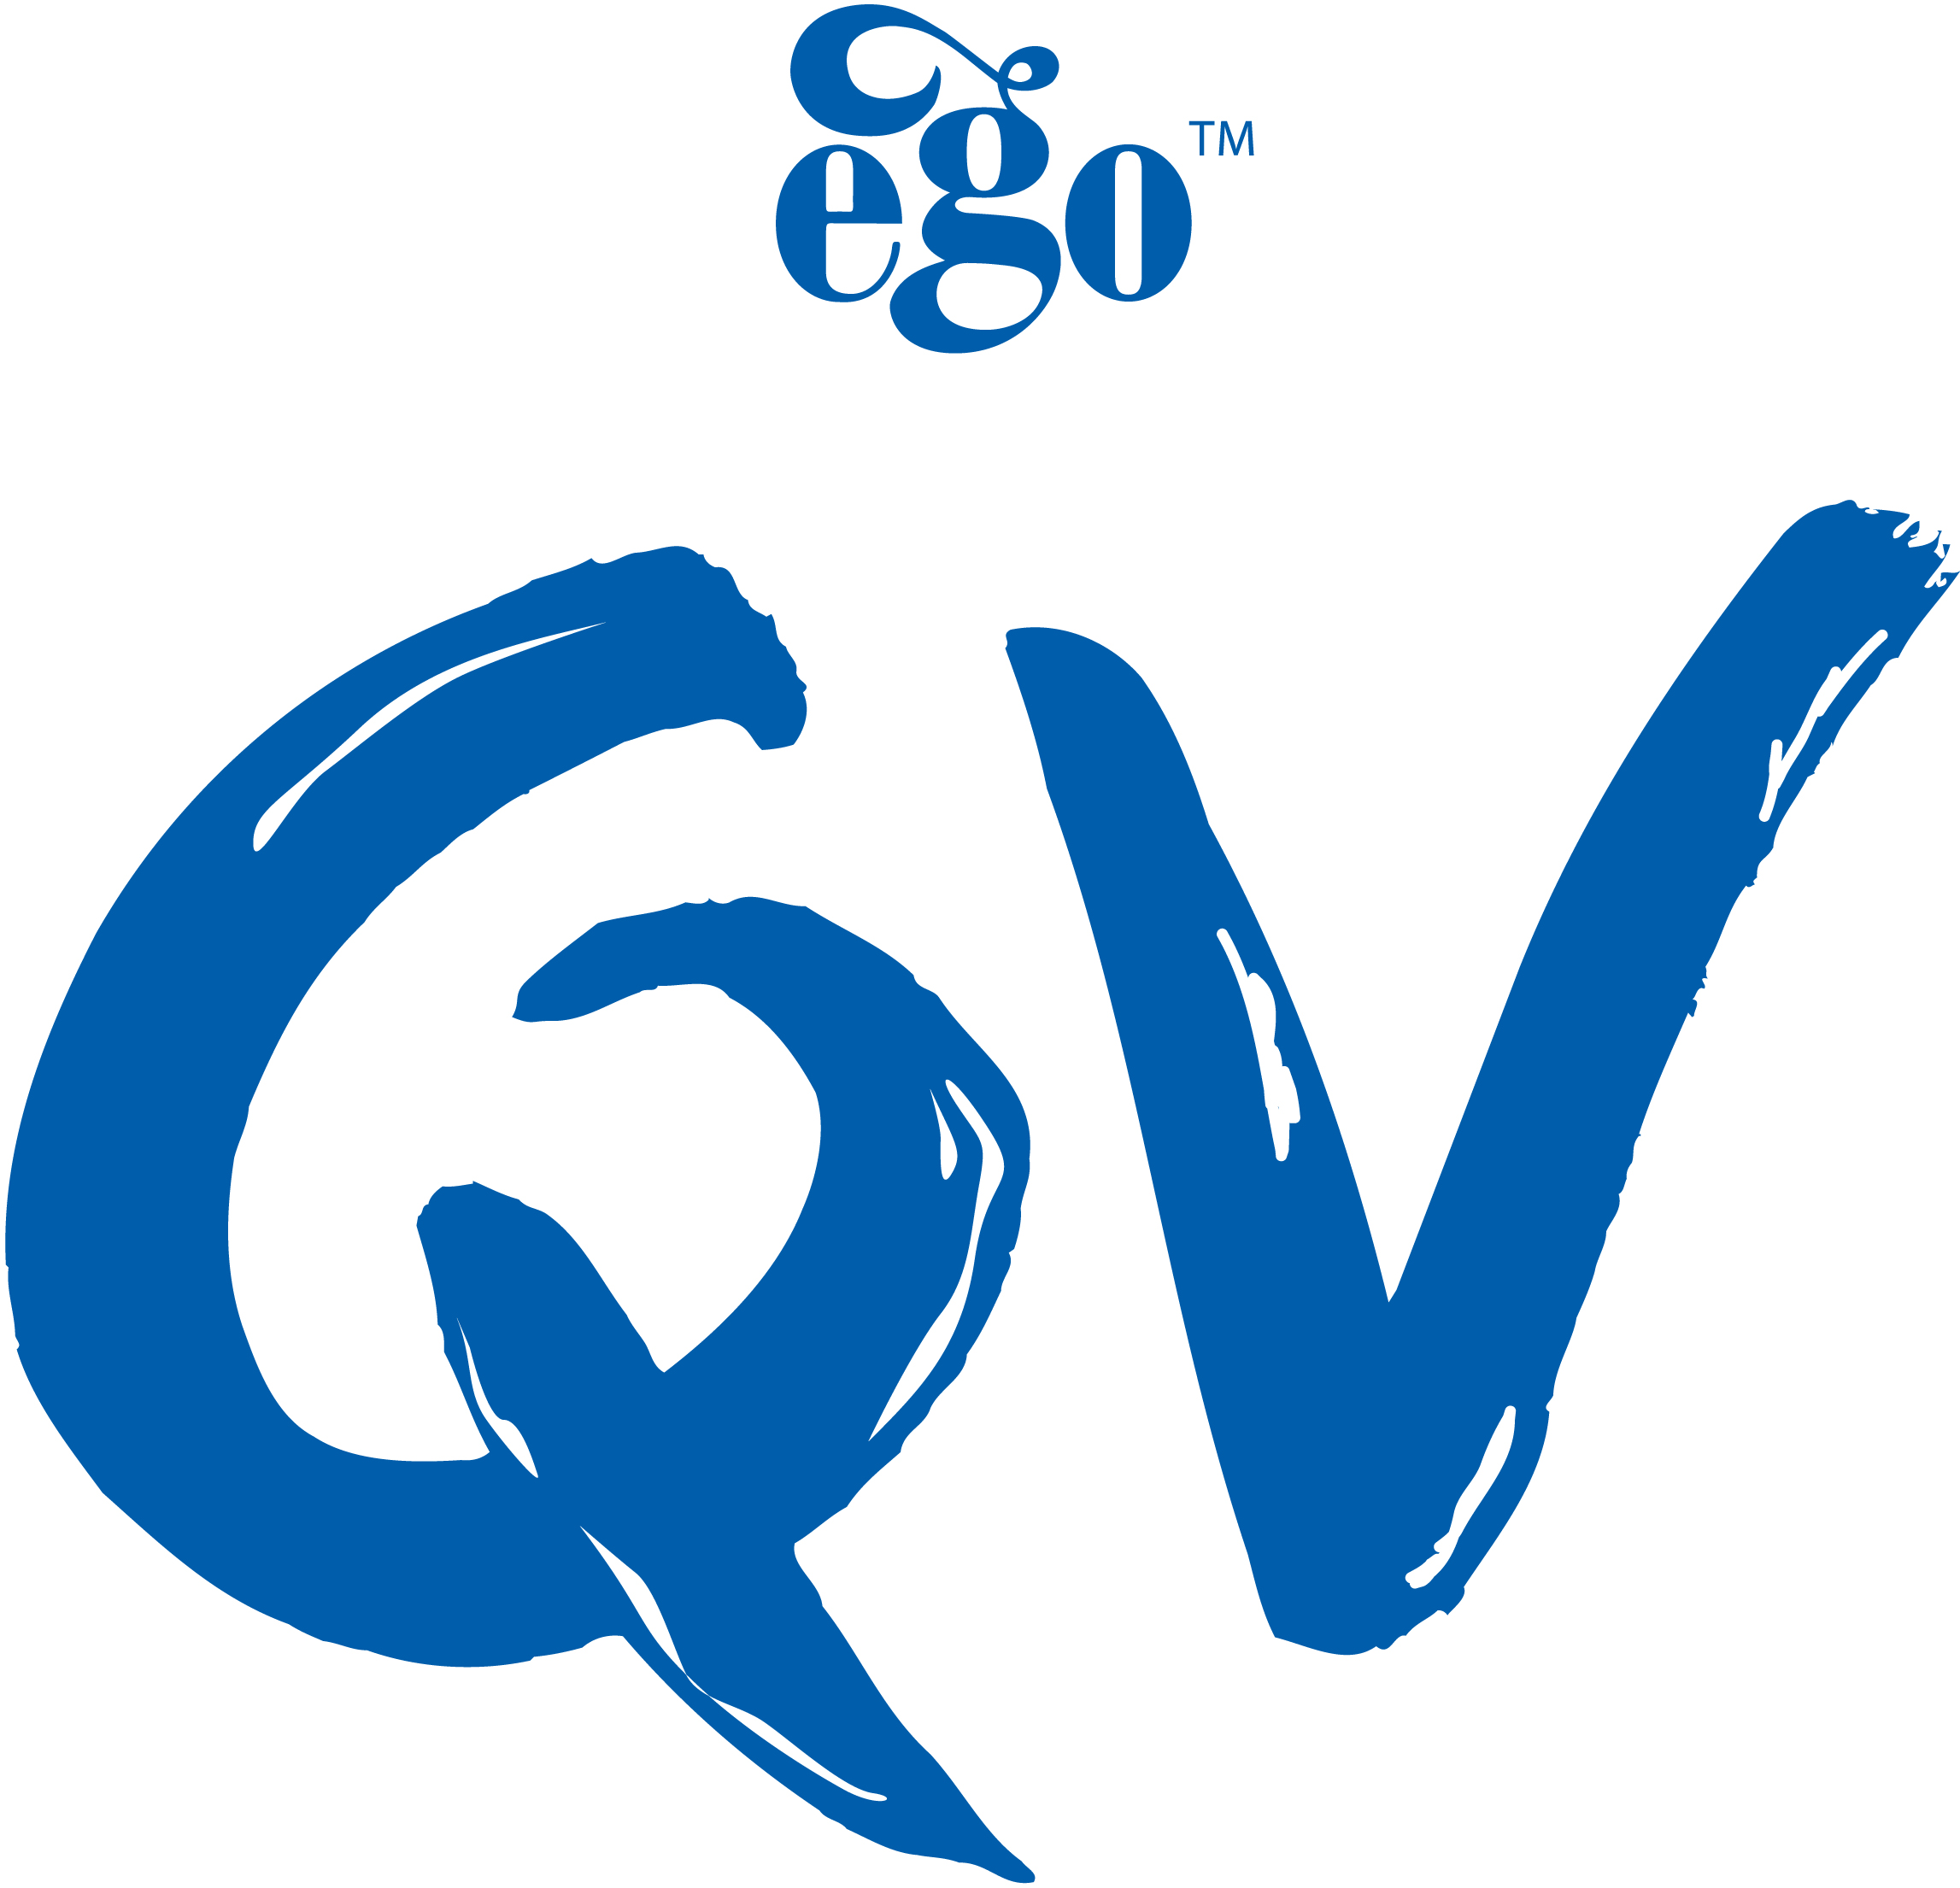 Ego QV Logo.jpg